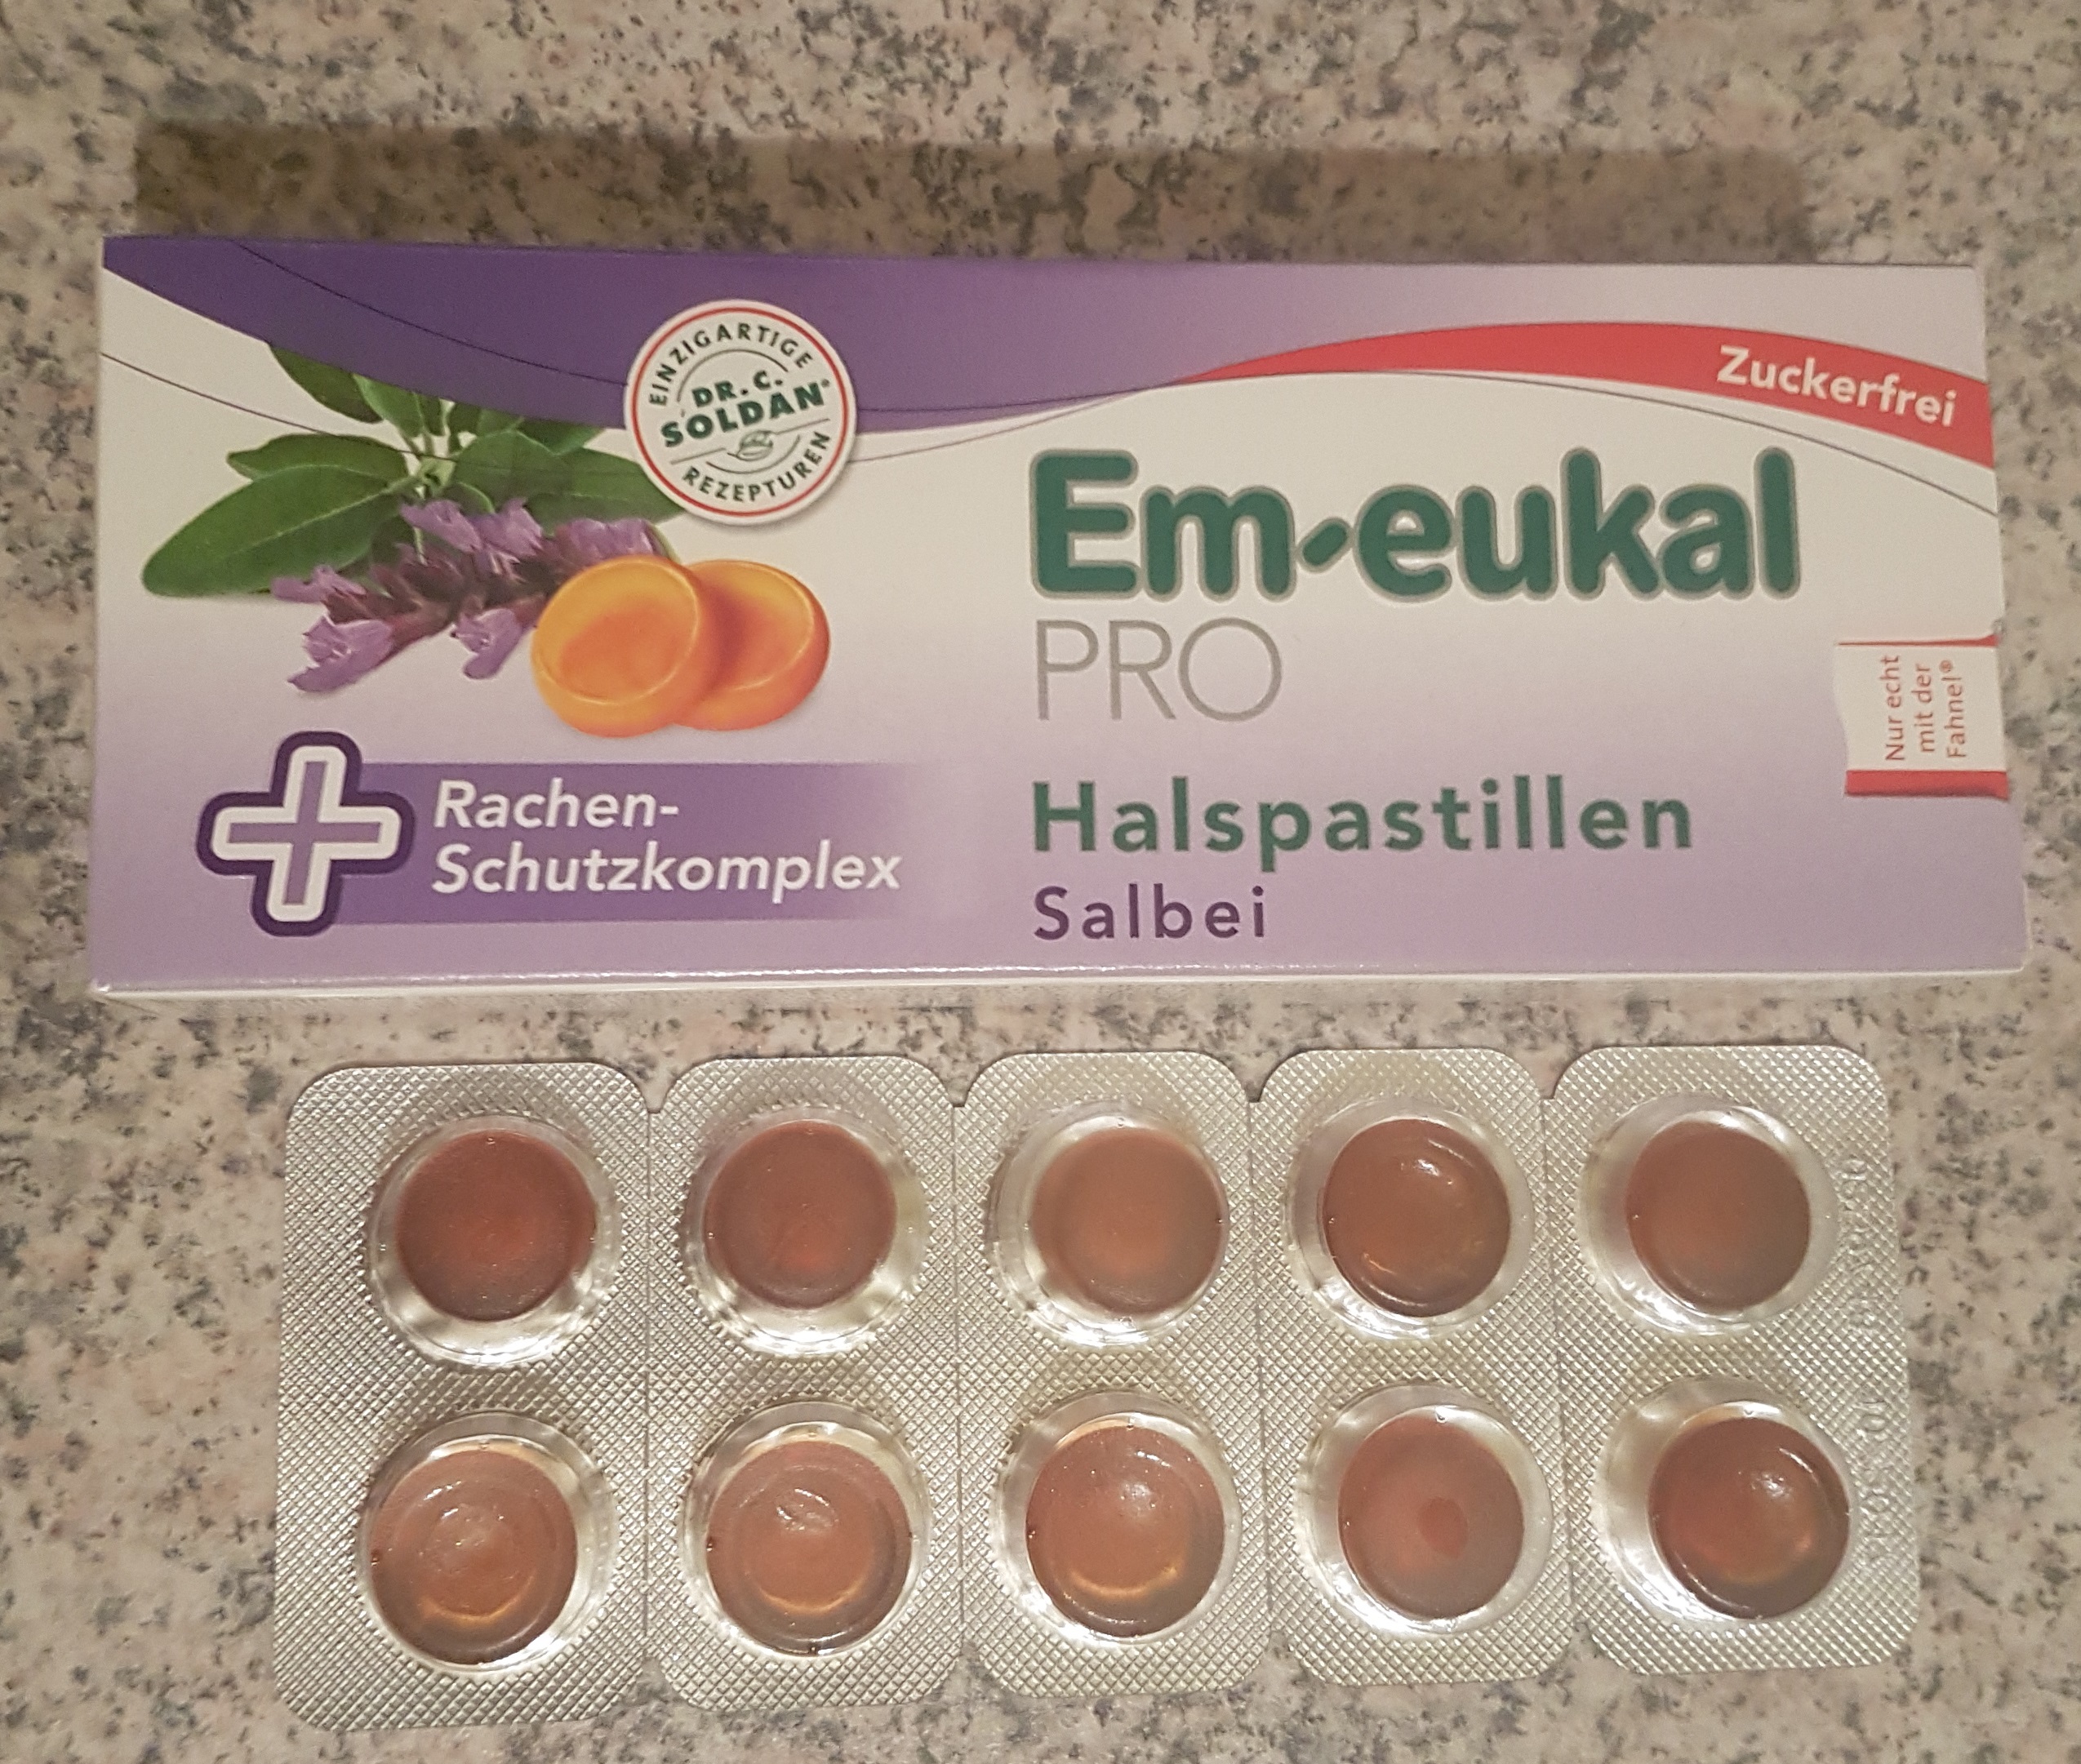 dr-c-soldan-em-eukal-pro-halspastillen-salbei